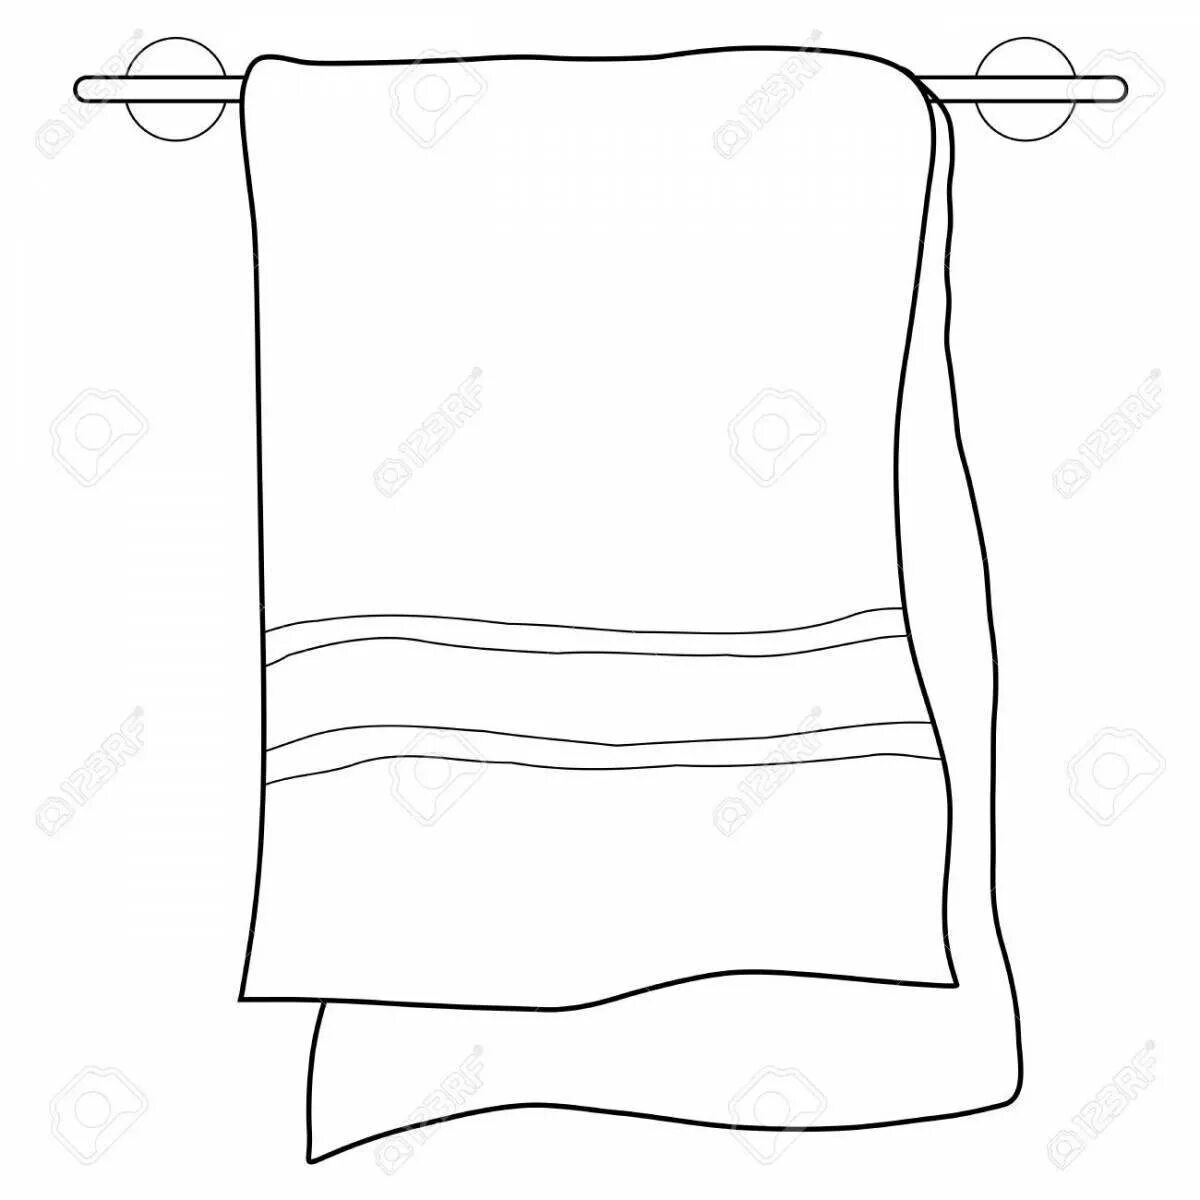 Раскраска полотенце. Полотенце раскраска для детей. Полотенце раскраска для малышей. Рисование полотенце.